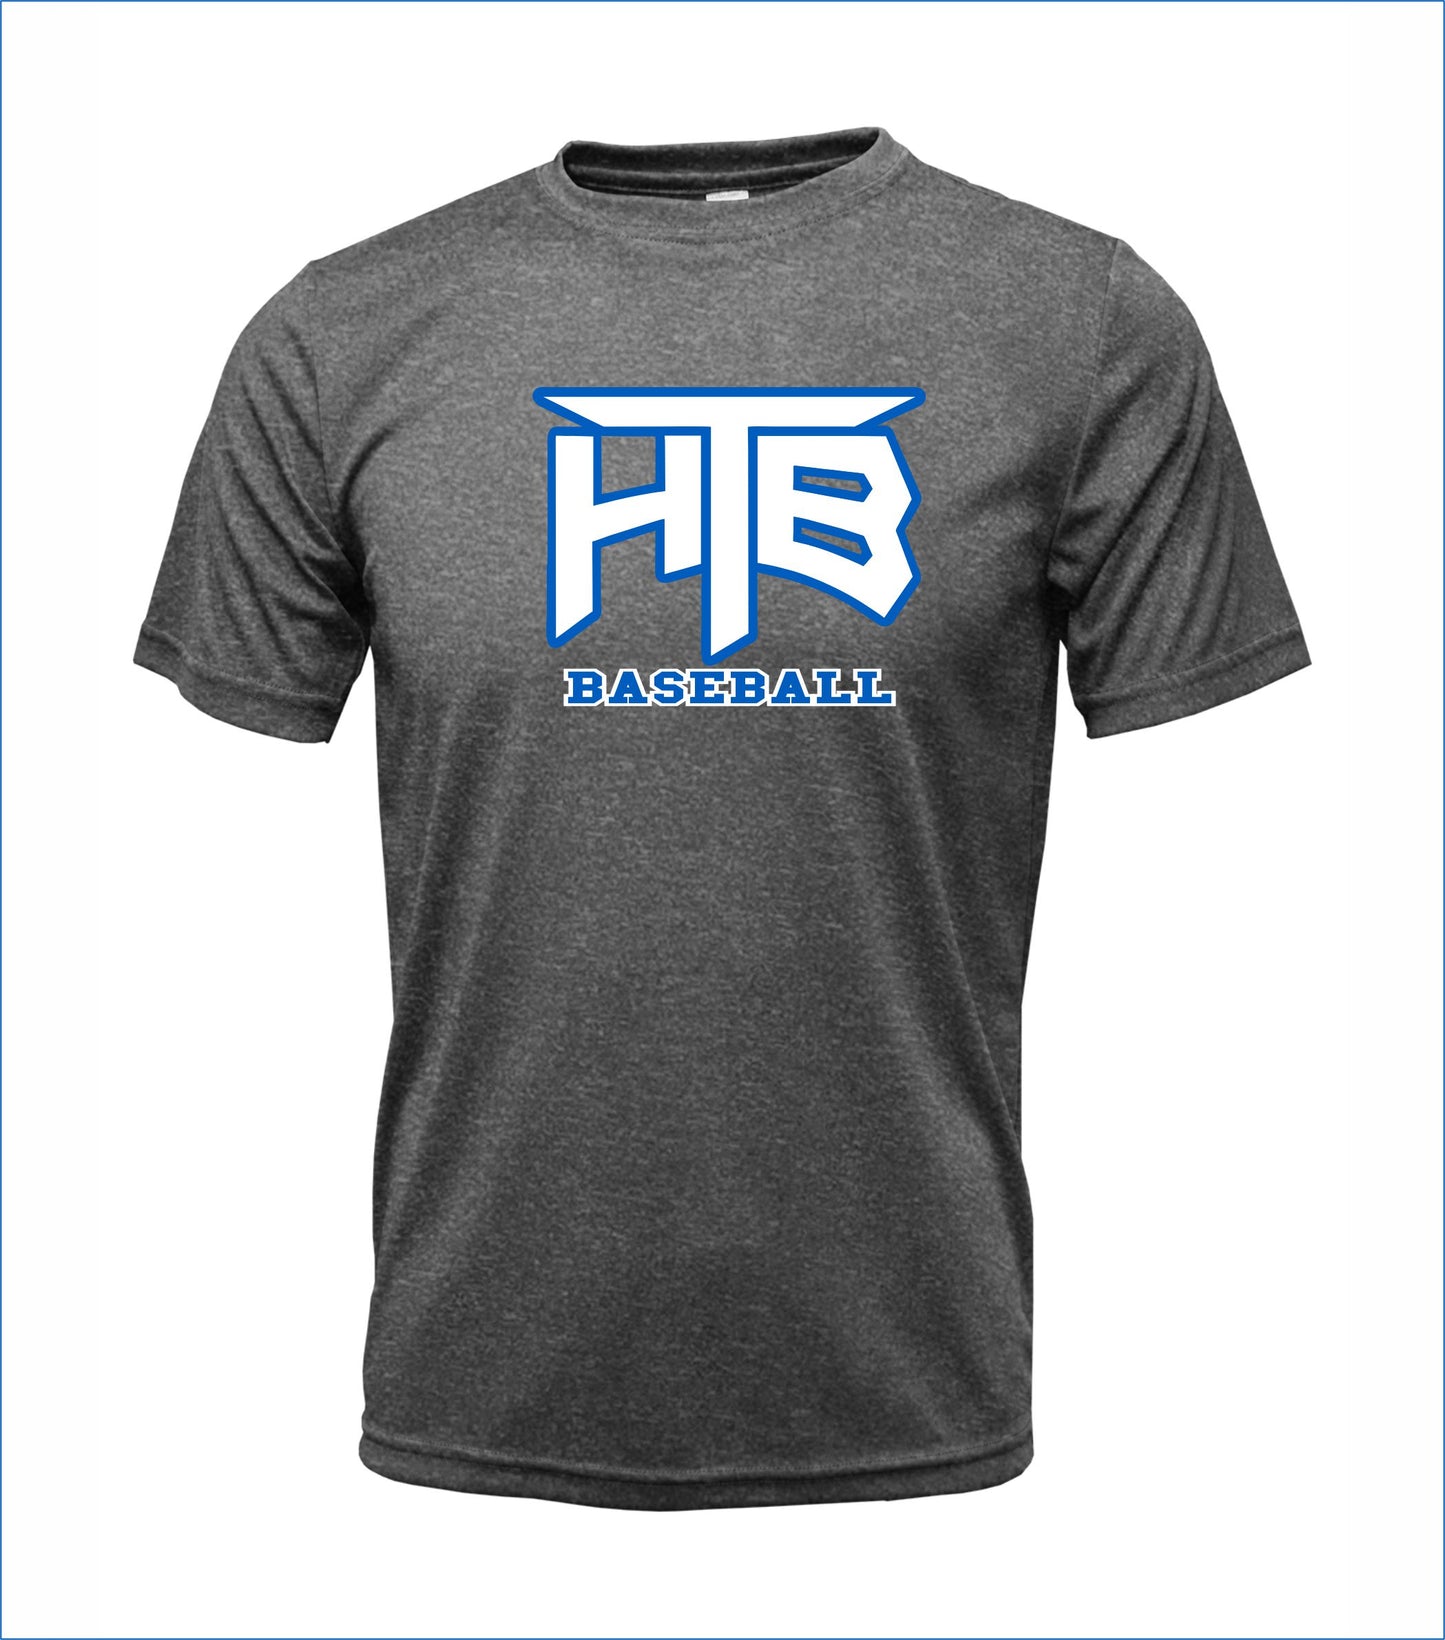 HTB Baseball Short Sleeve Dri-Fit T-Shirt